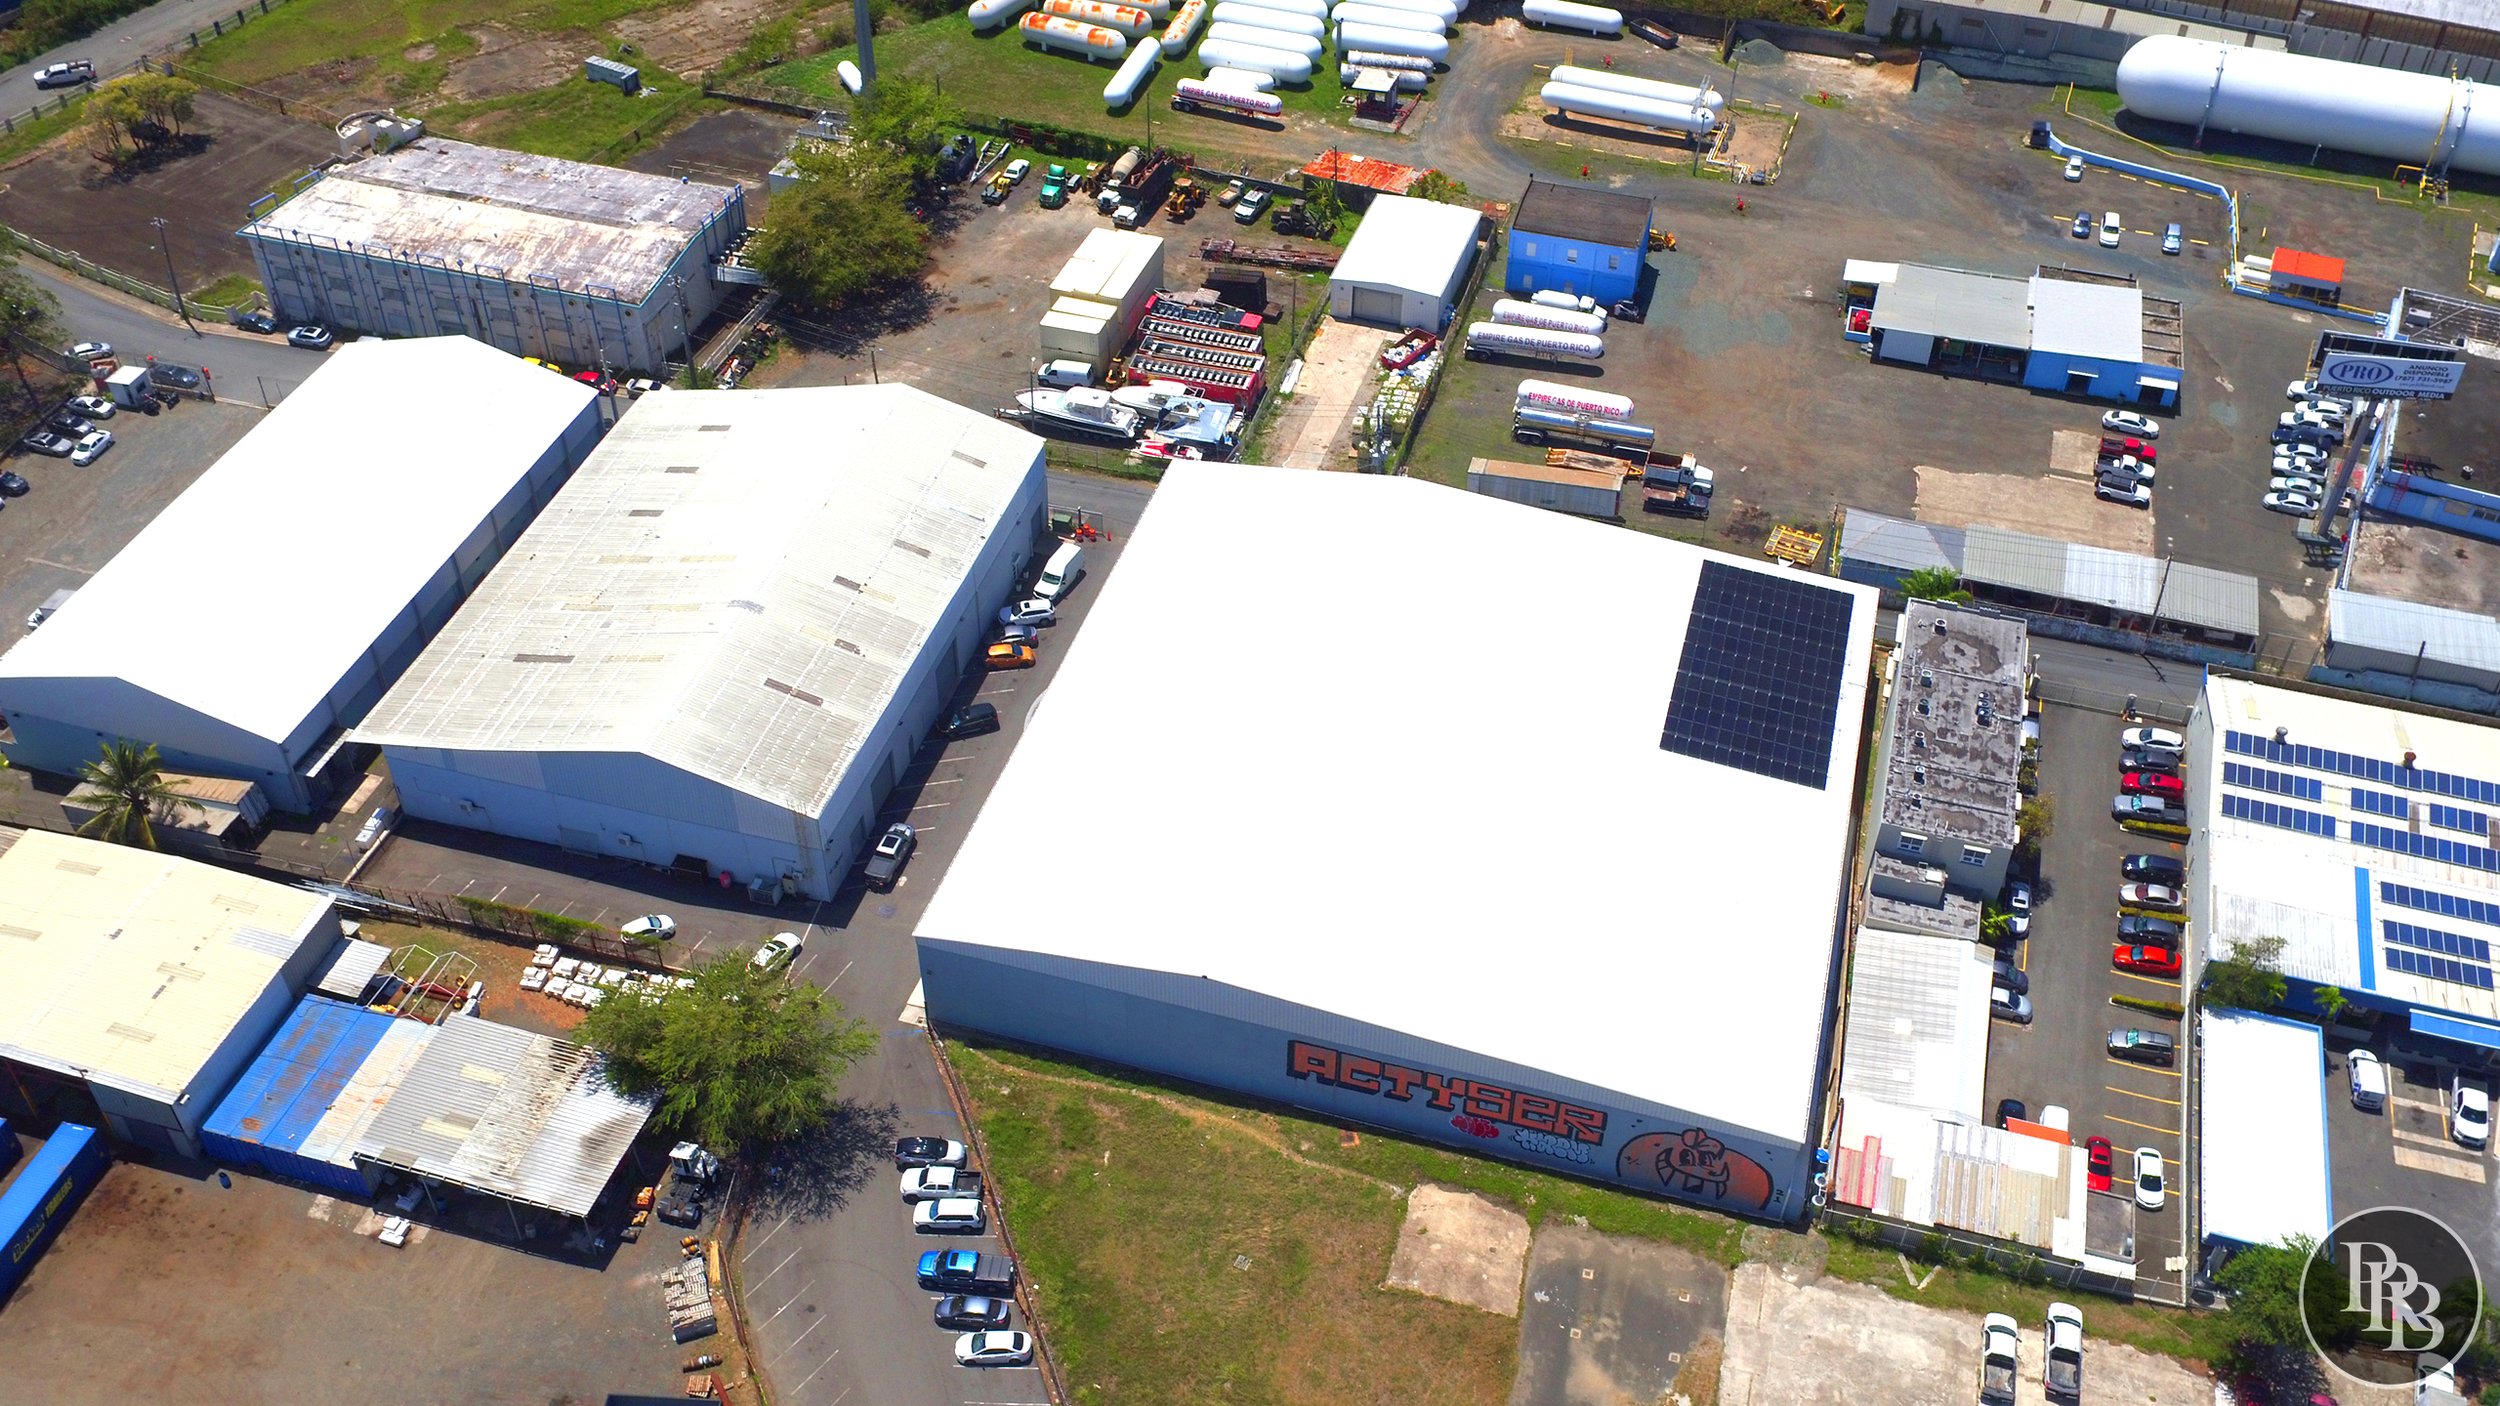 Miramar 41,000 sqft warehouse PRB logo #2.jpg